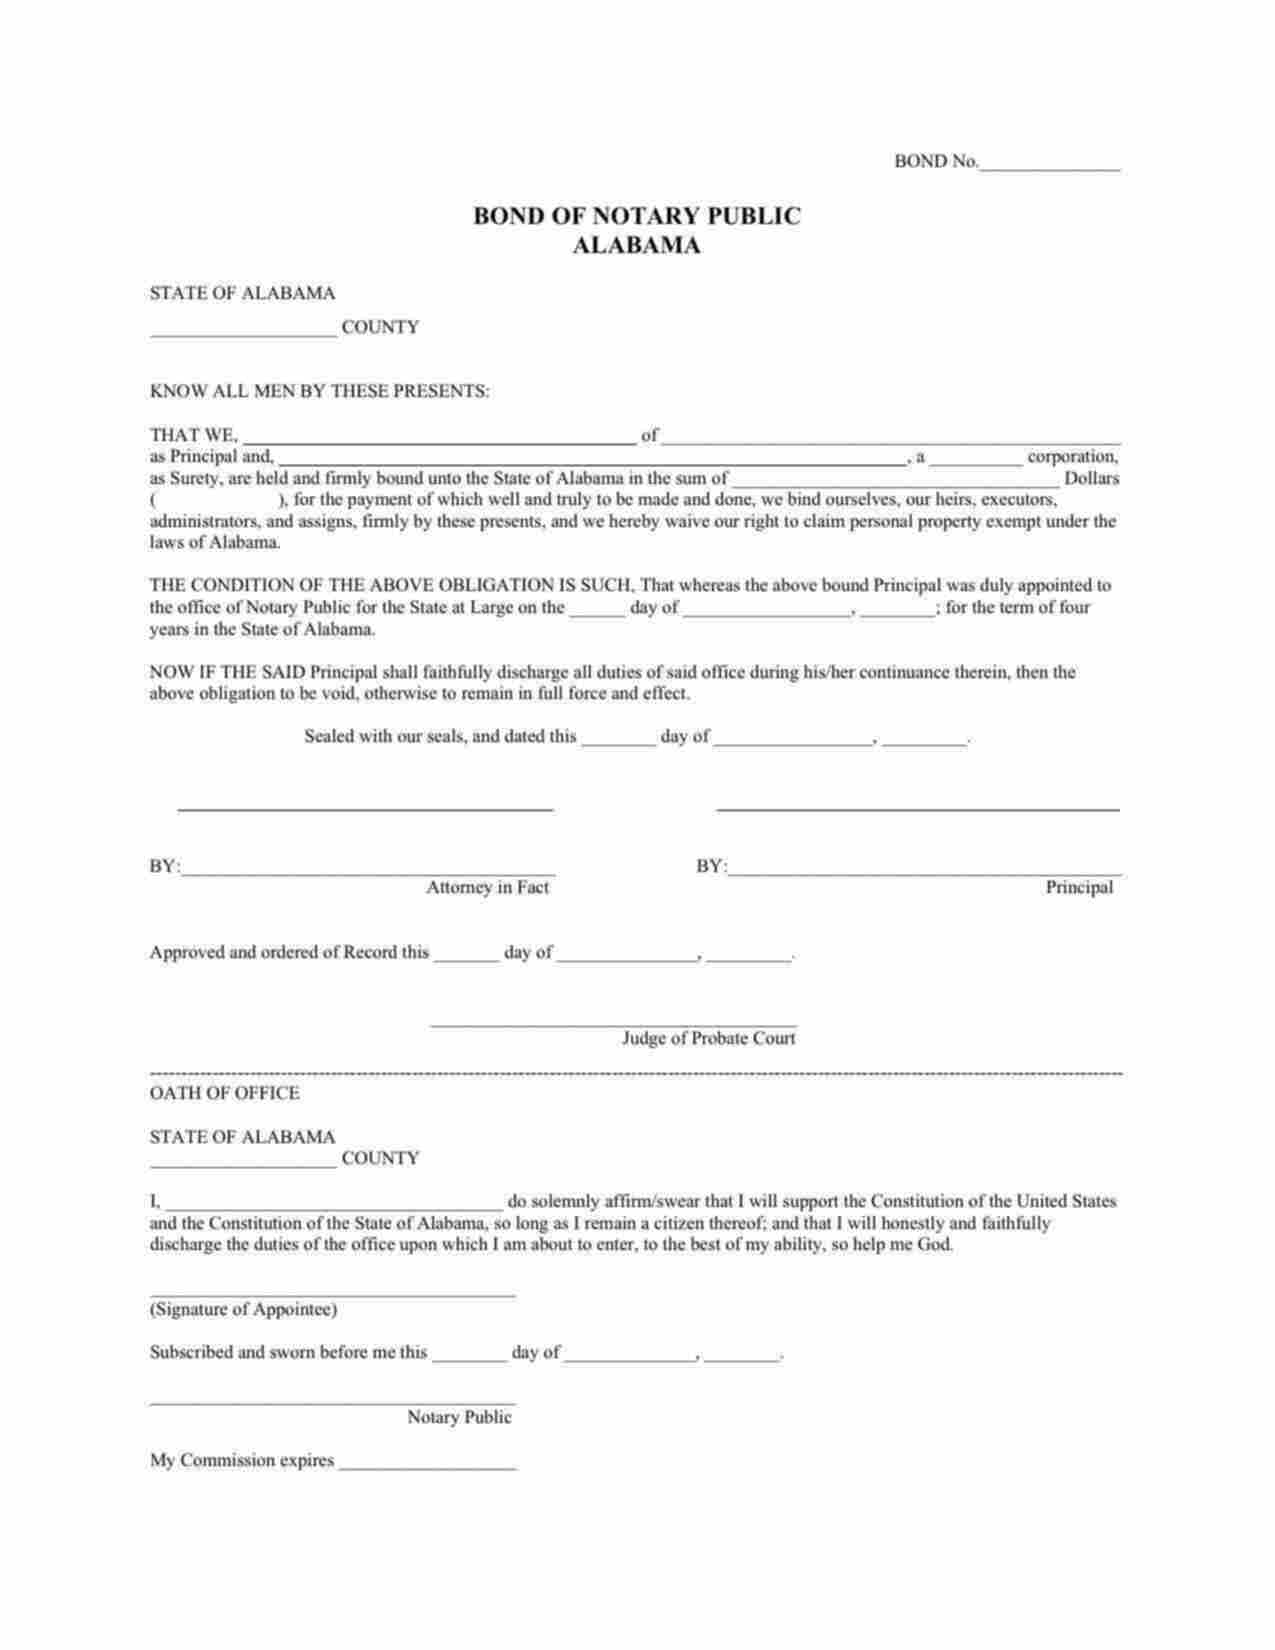 Alabama Notary Public Bond Form